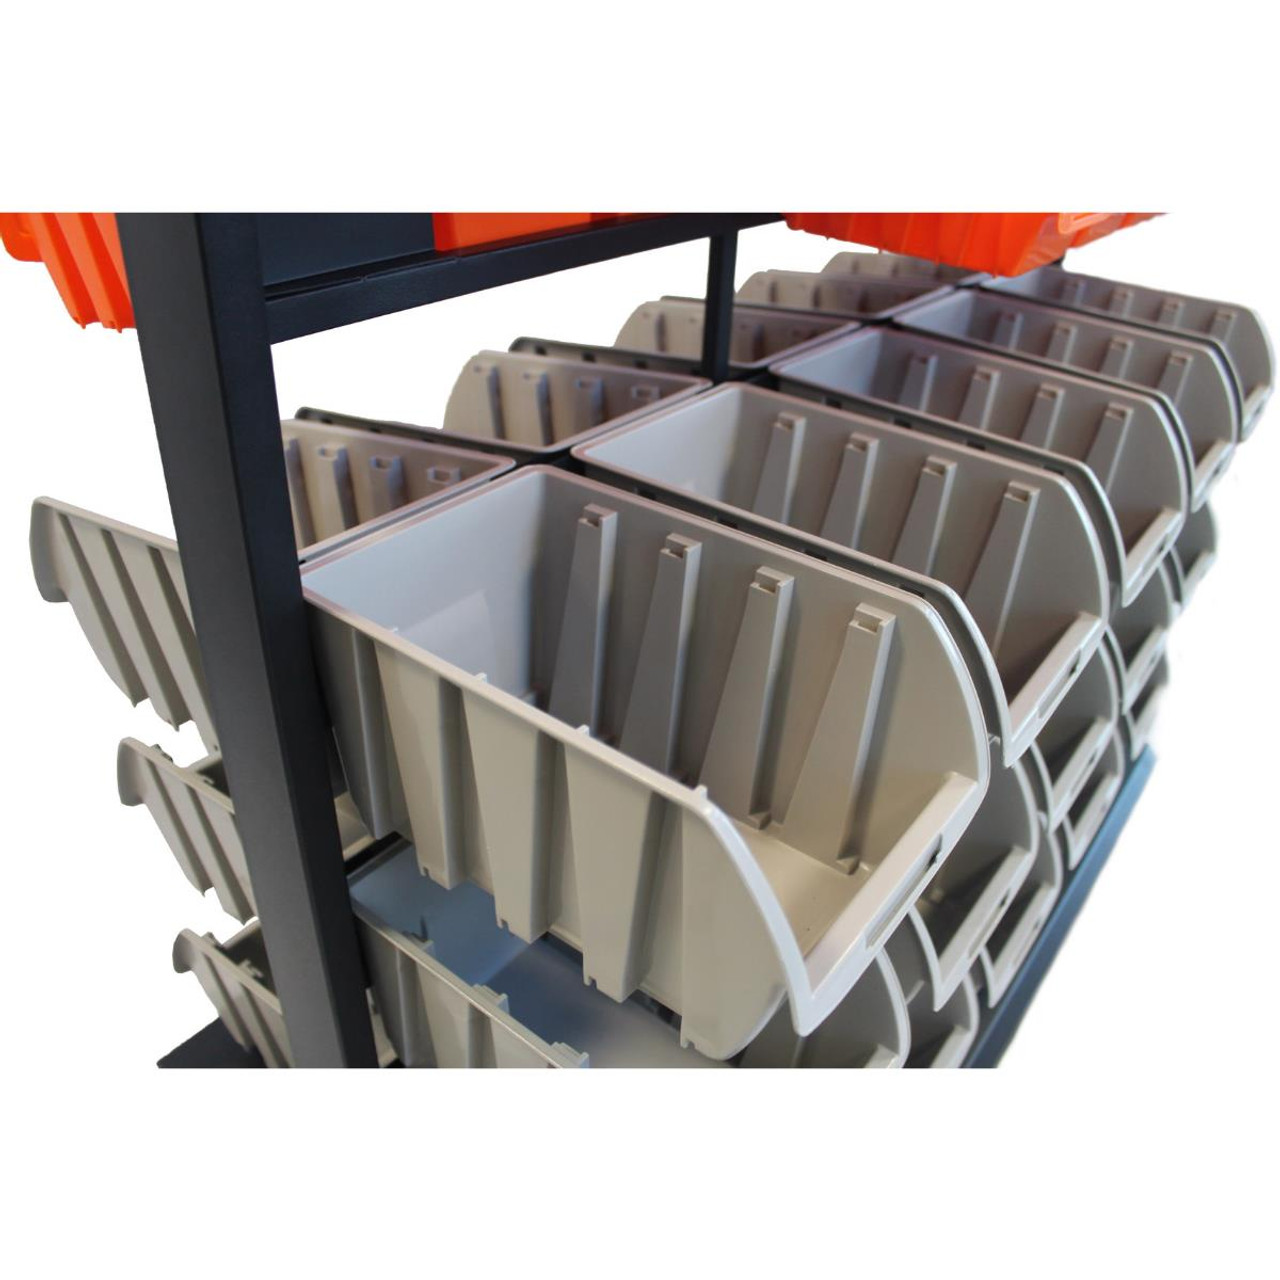 Mobile storage bin rack with 112 storage bins, double-sided